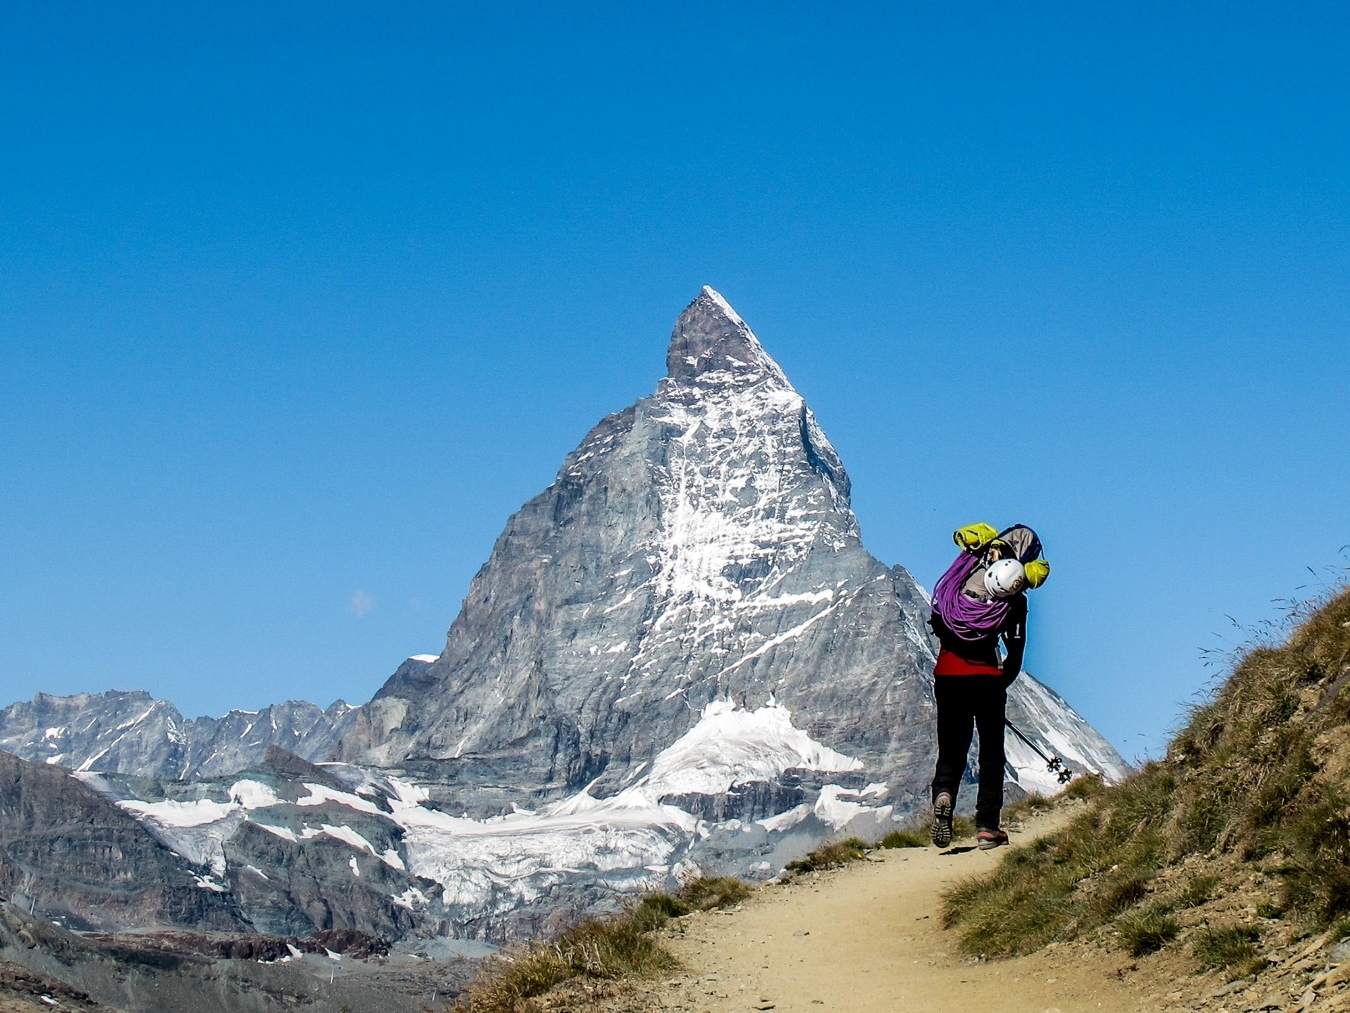 The famous Matterhorn in Switzerland